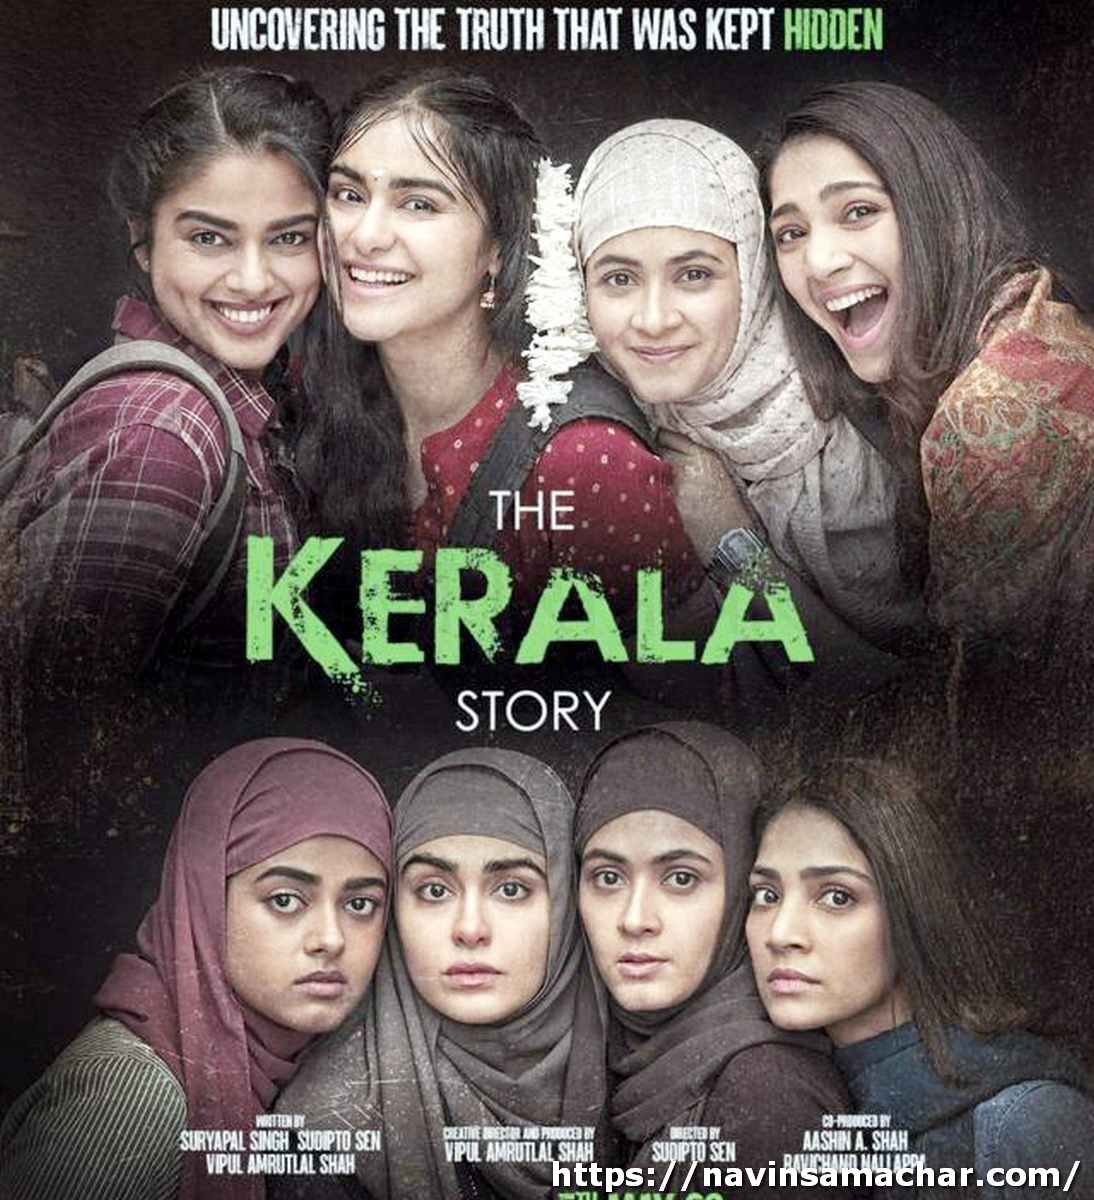 Kerala connection